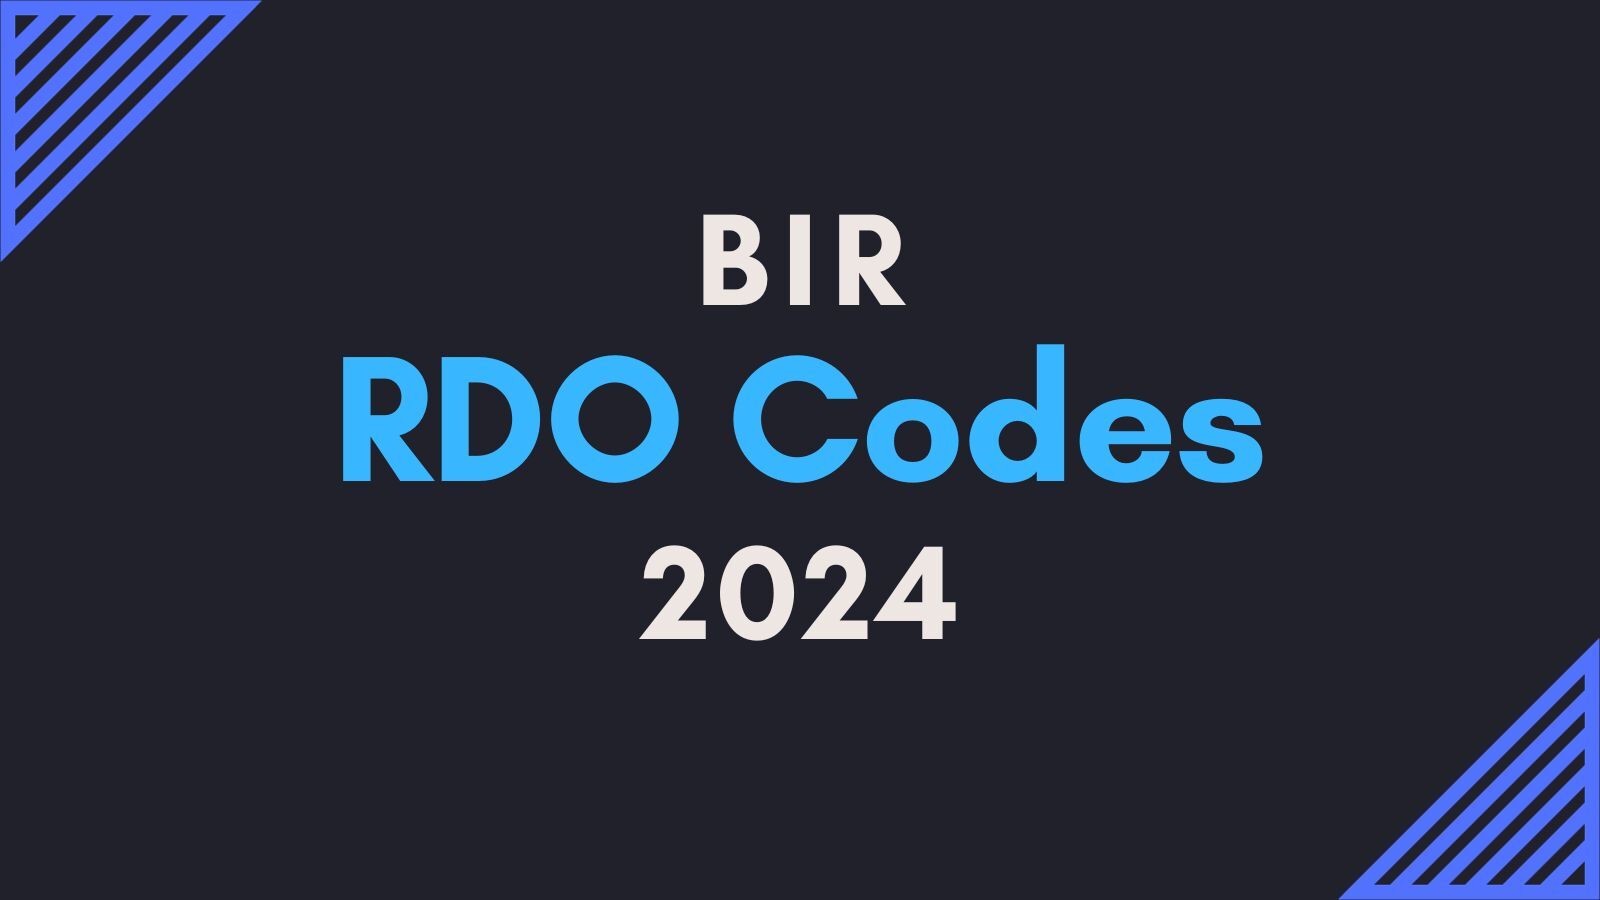 list of BIR RDO codes in 2024